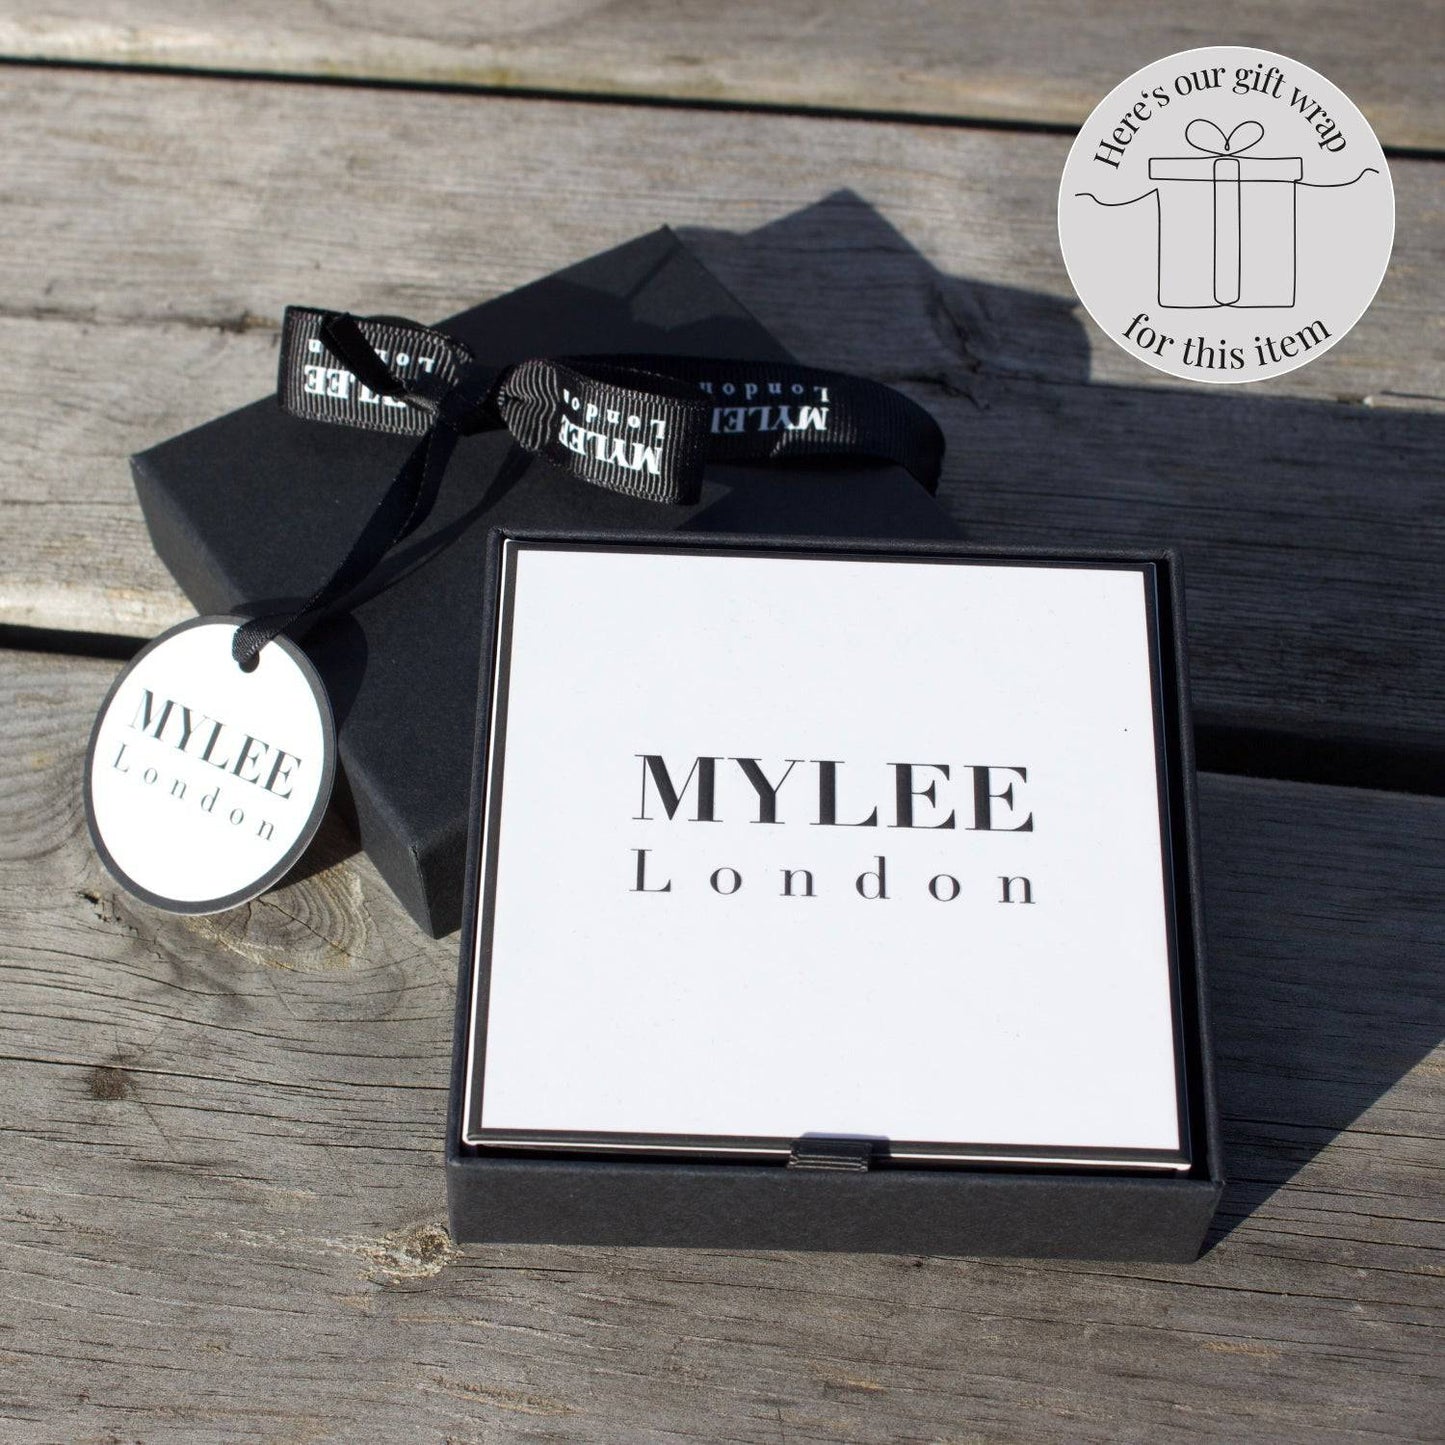 Tiger Silver Necklace - MYLEE London